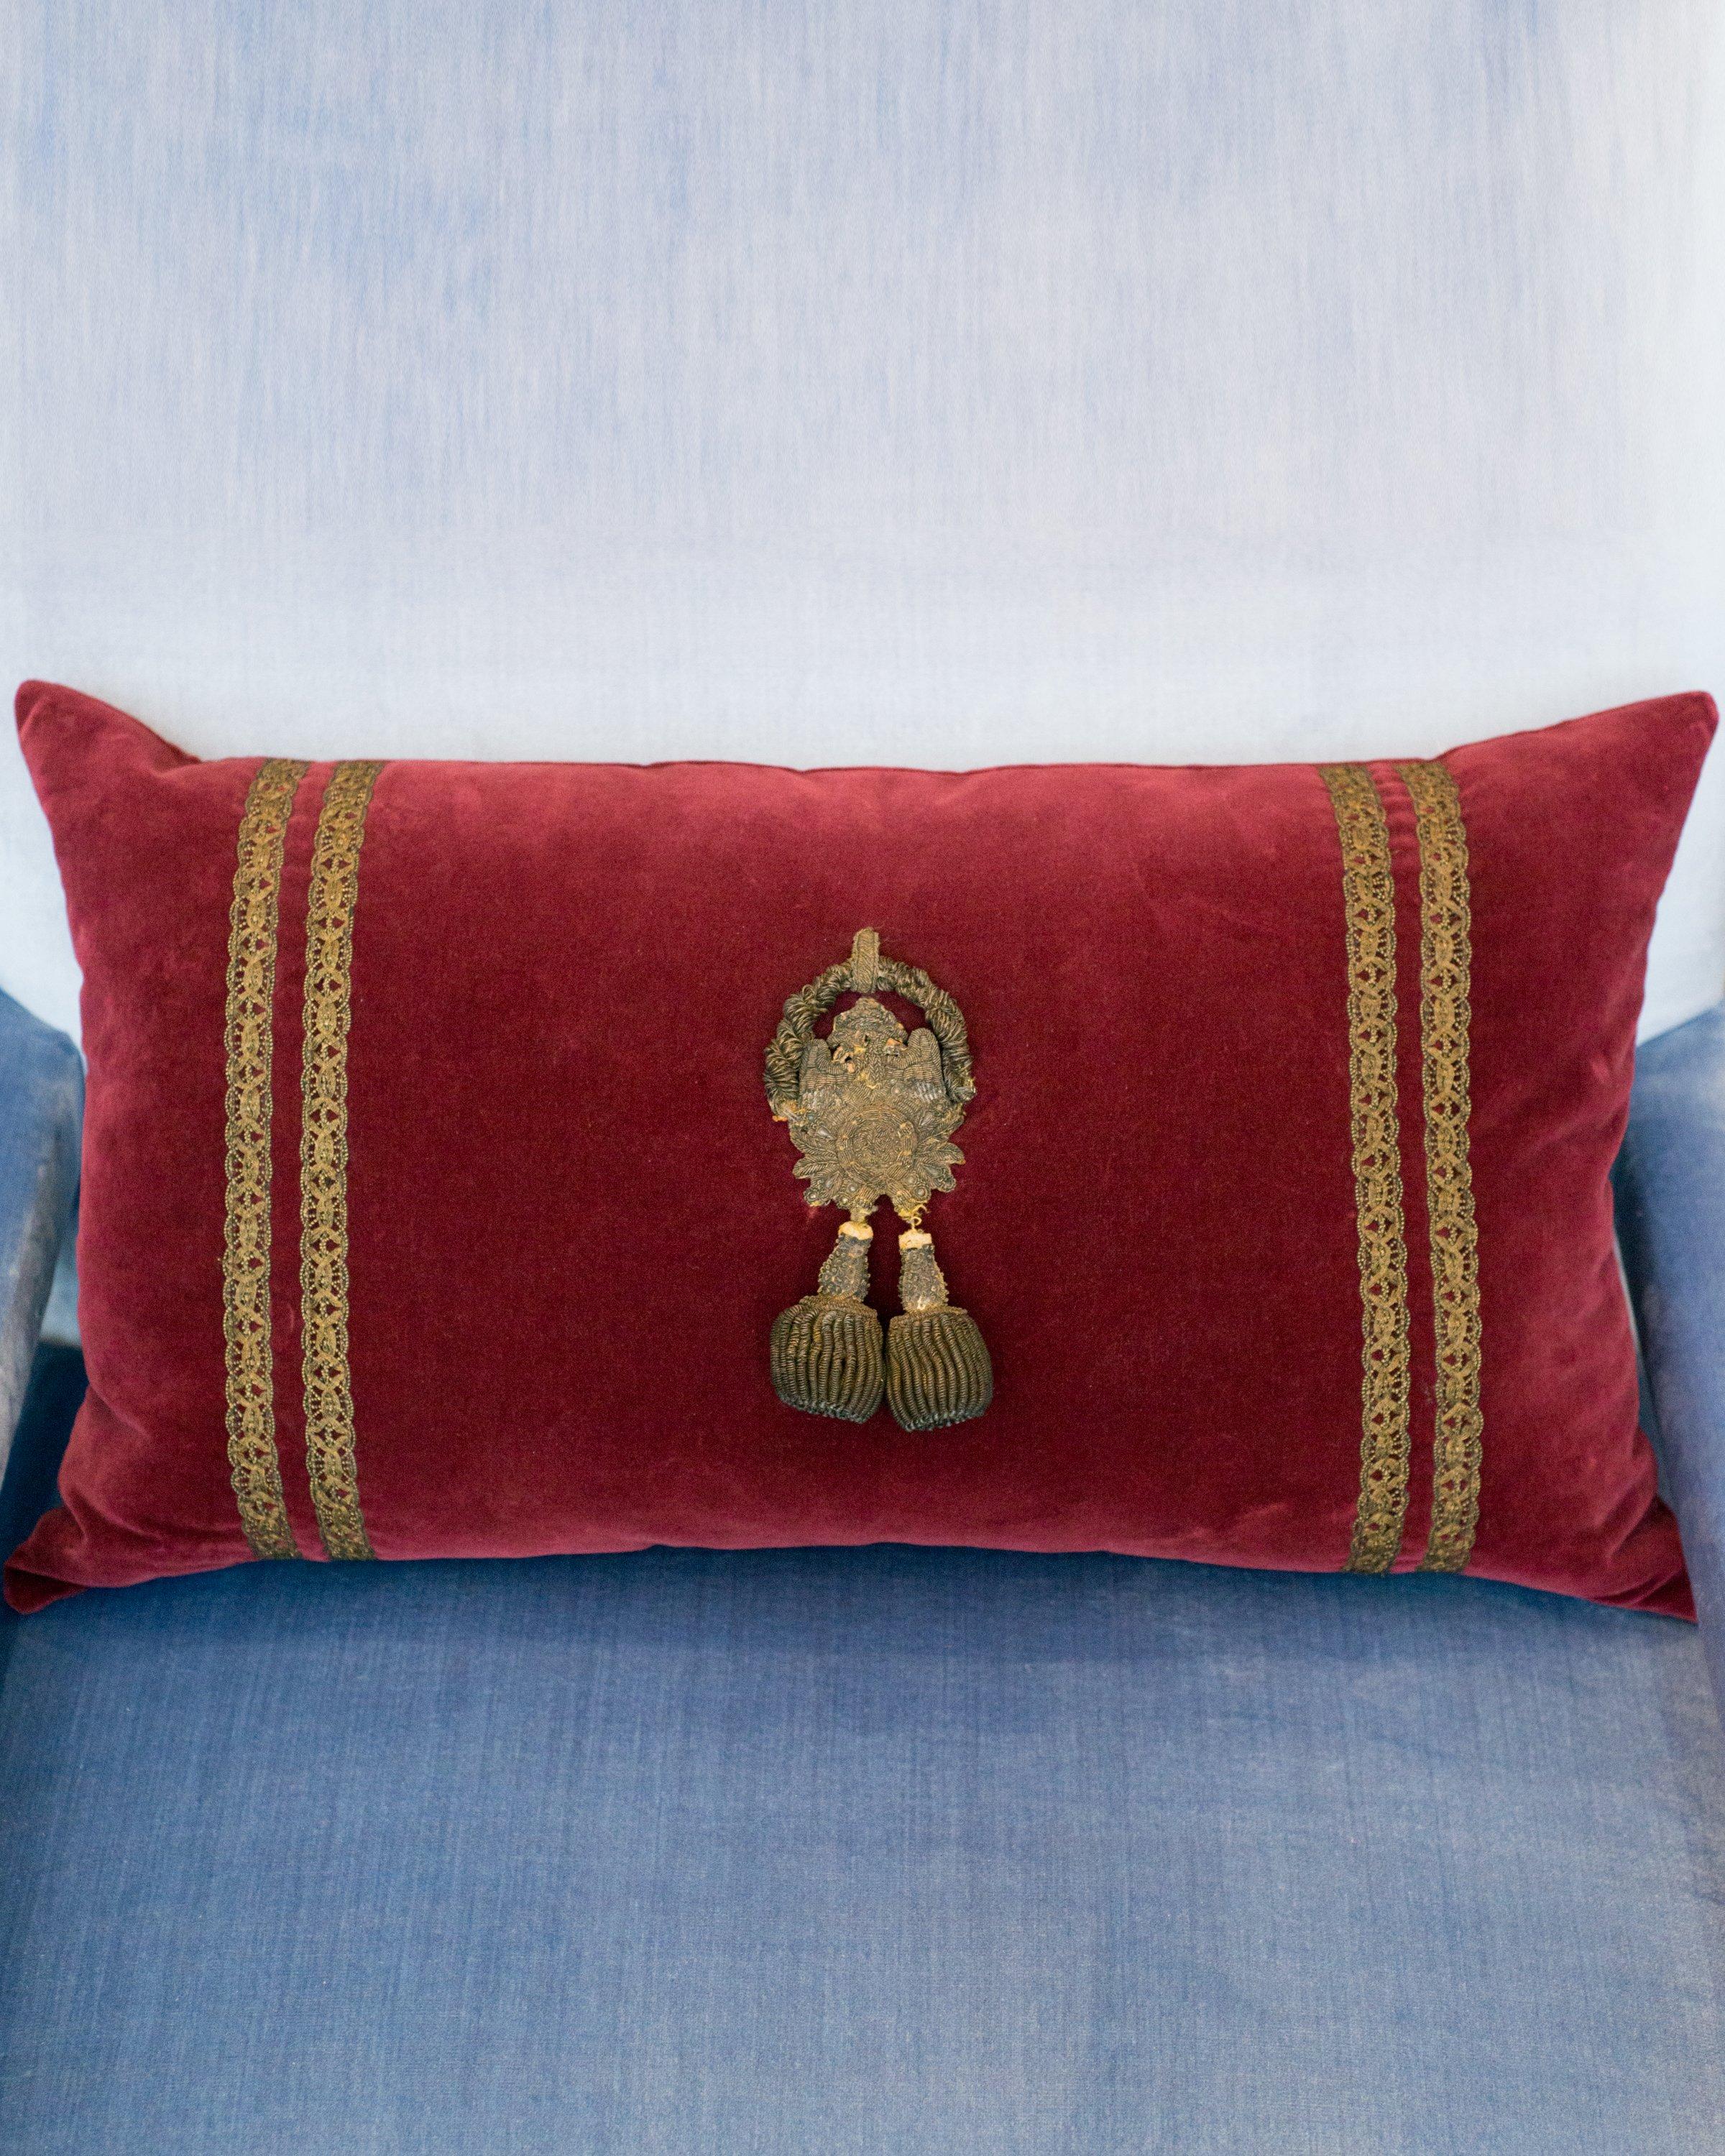 A burgundy velvet ottoman pillow with antique metallic gimp and large metallic beaded tassels.